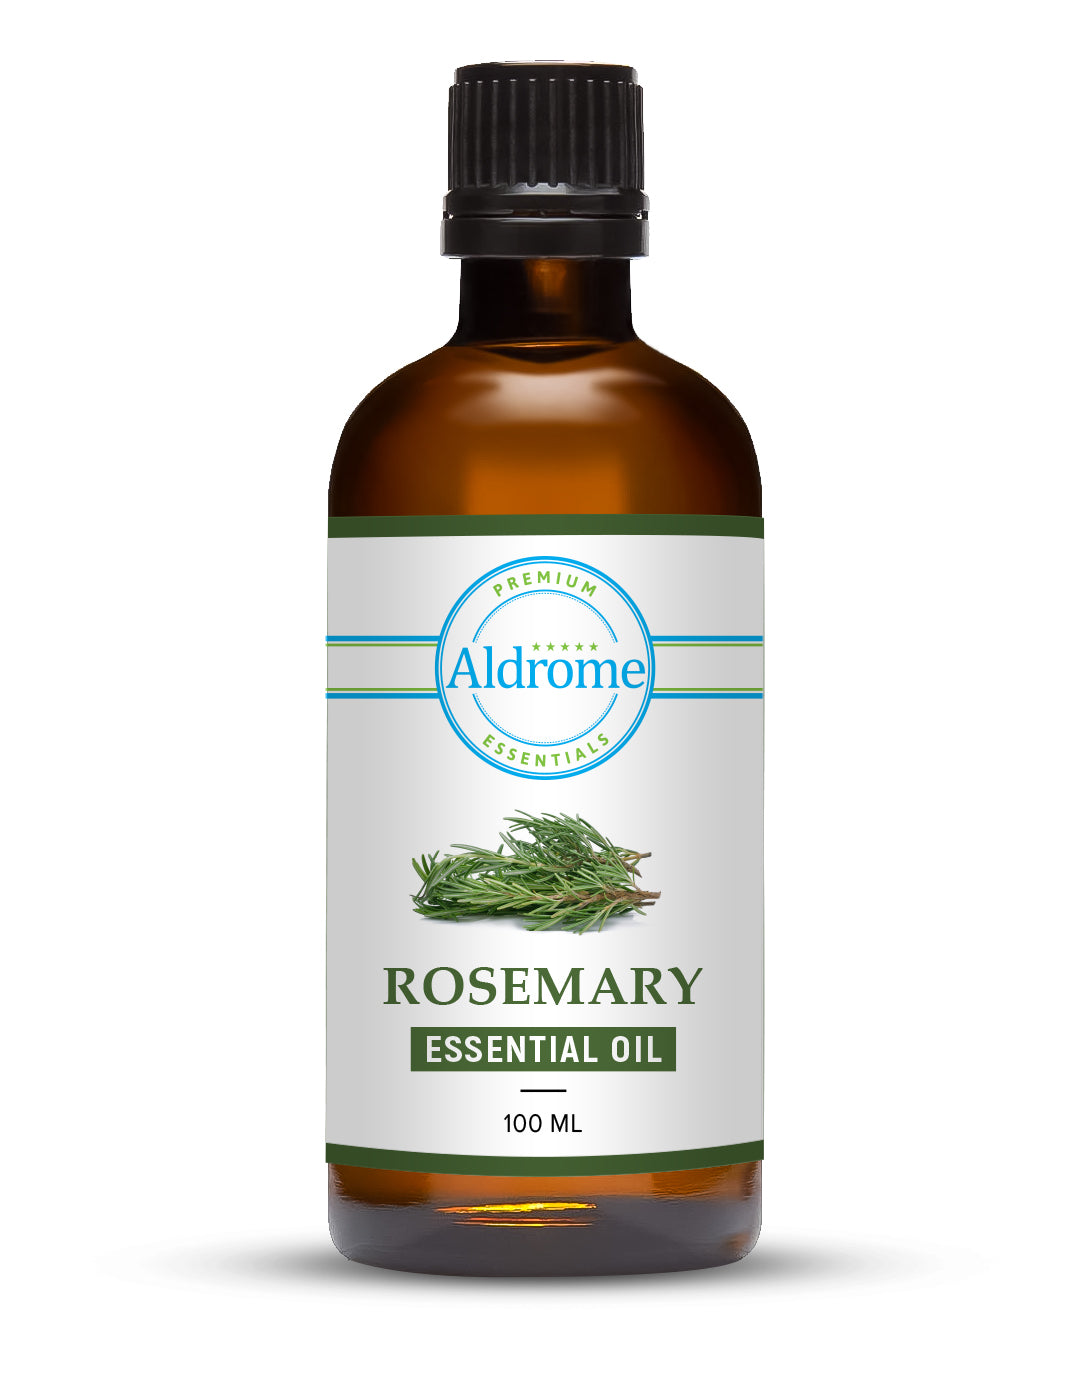 Buy Rosemary Essential Oil - 100ml at Best price | Aldrome Premium Fragrance Oil